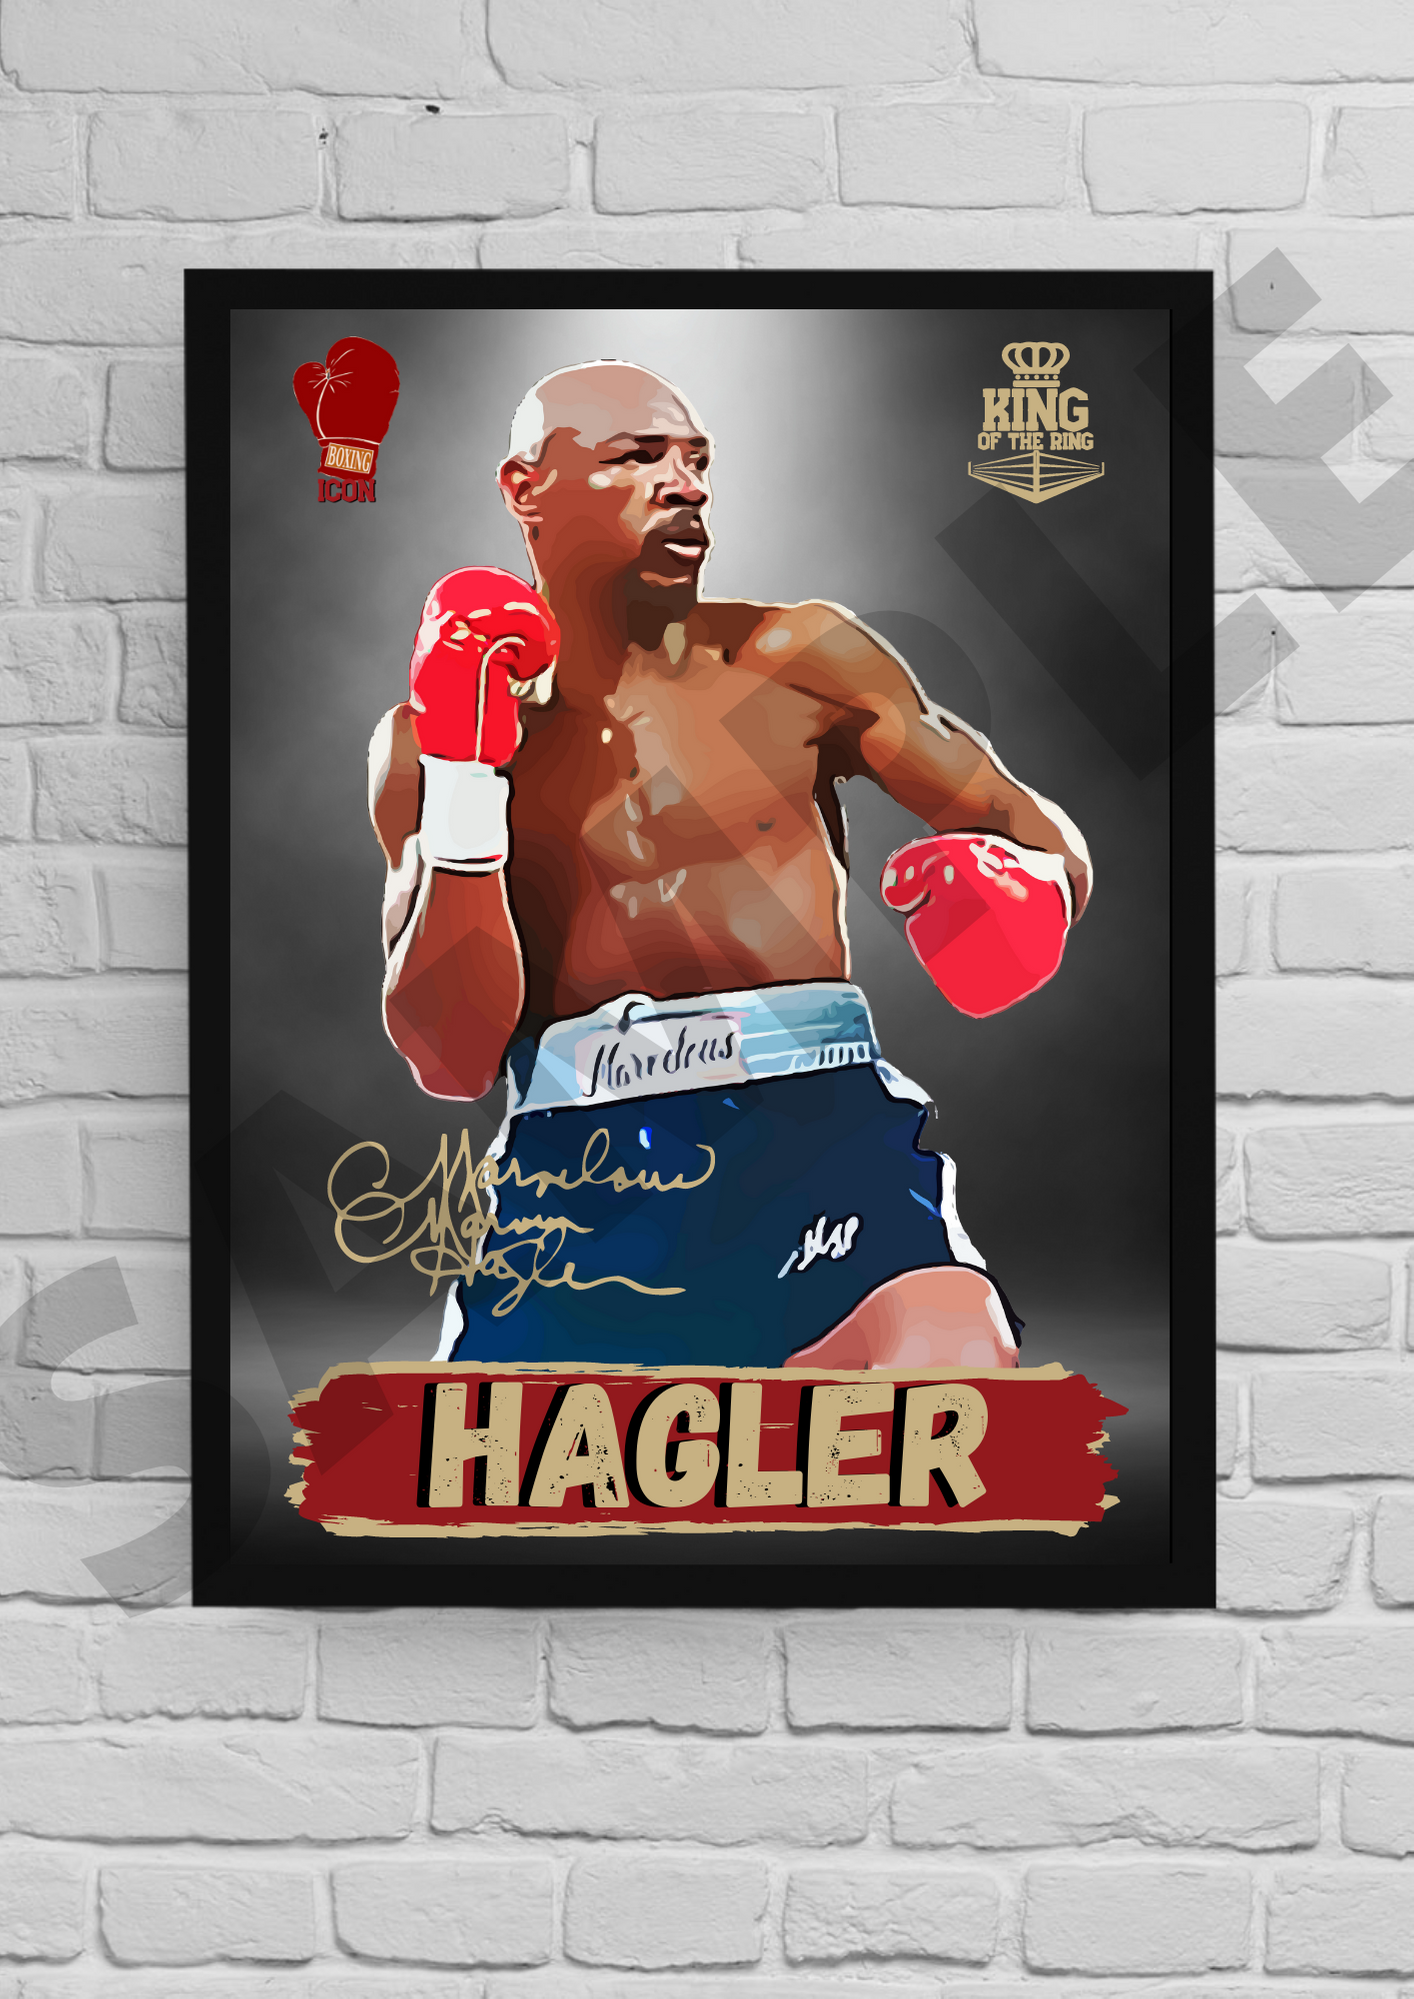 Marvelous Marvin Hagler memorabilia 2 (Boxing) #111 - Signed print